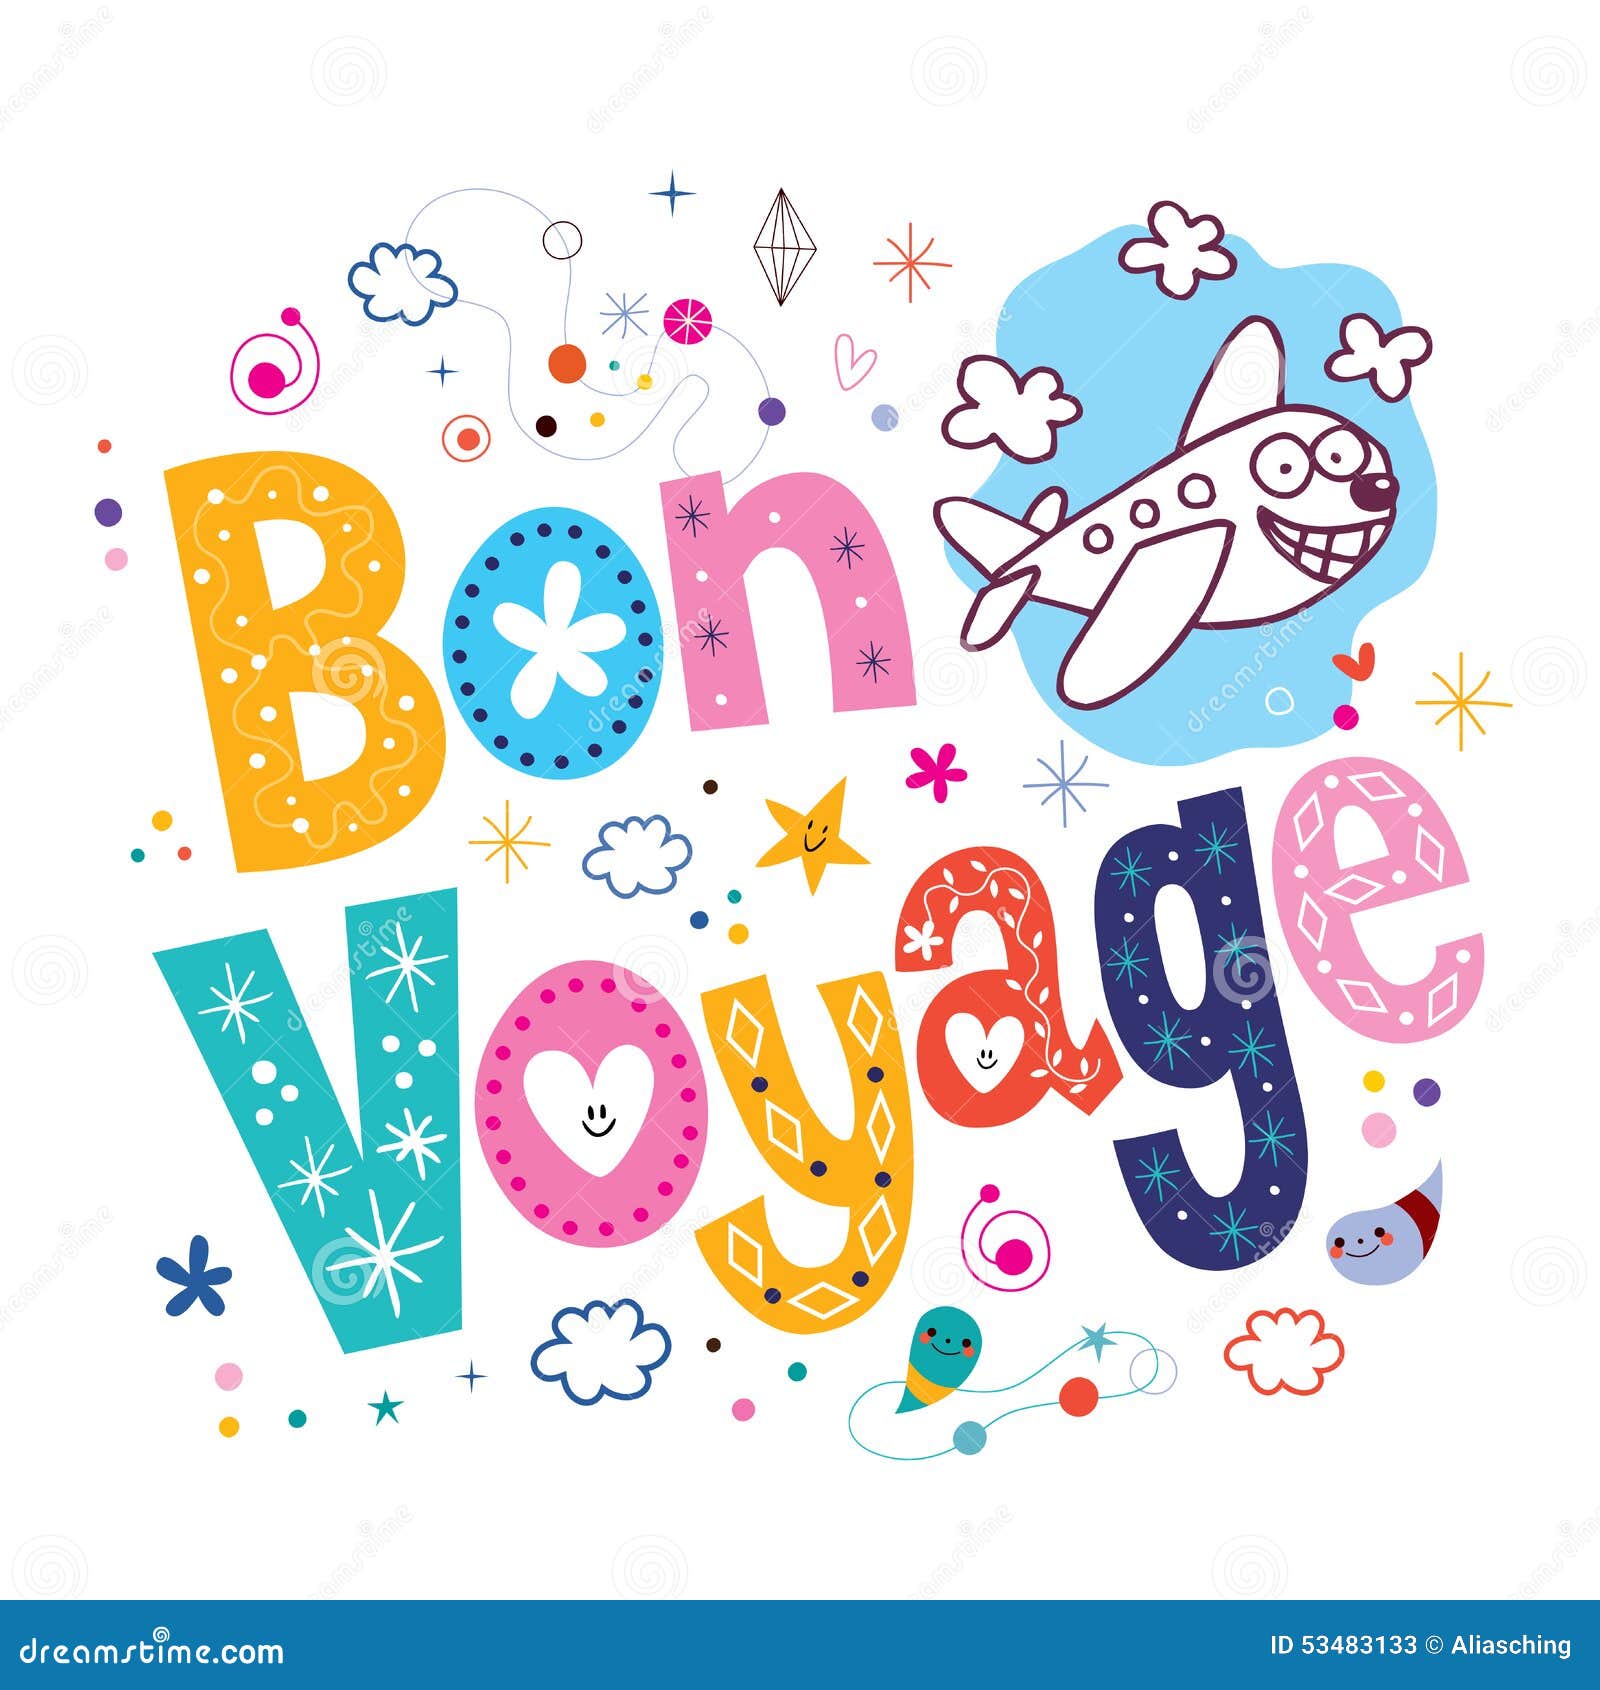 bon-voyage-stock-vector-image-53483133